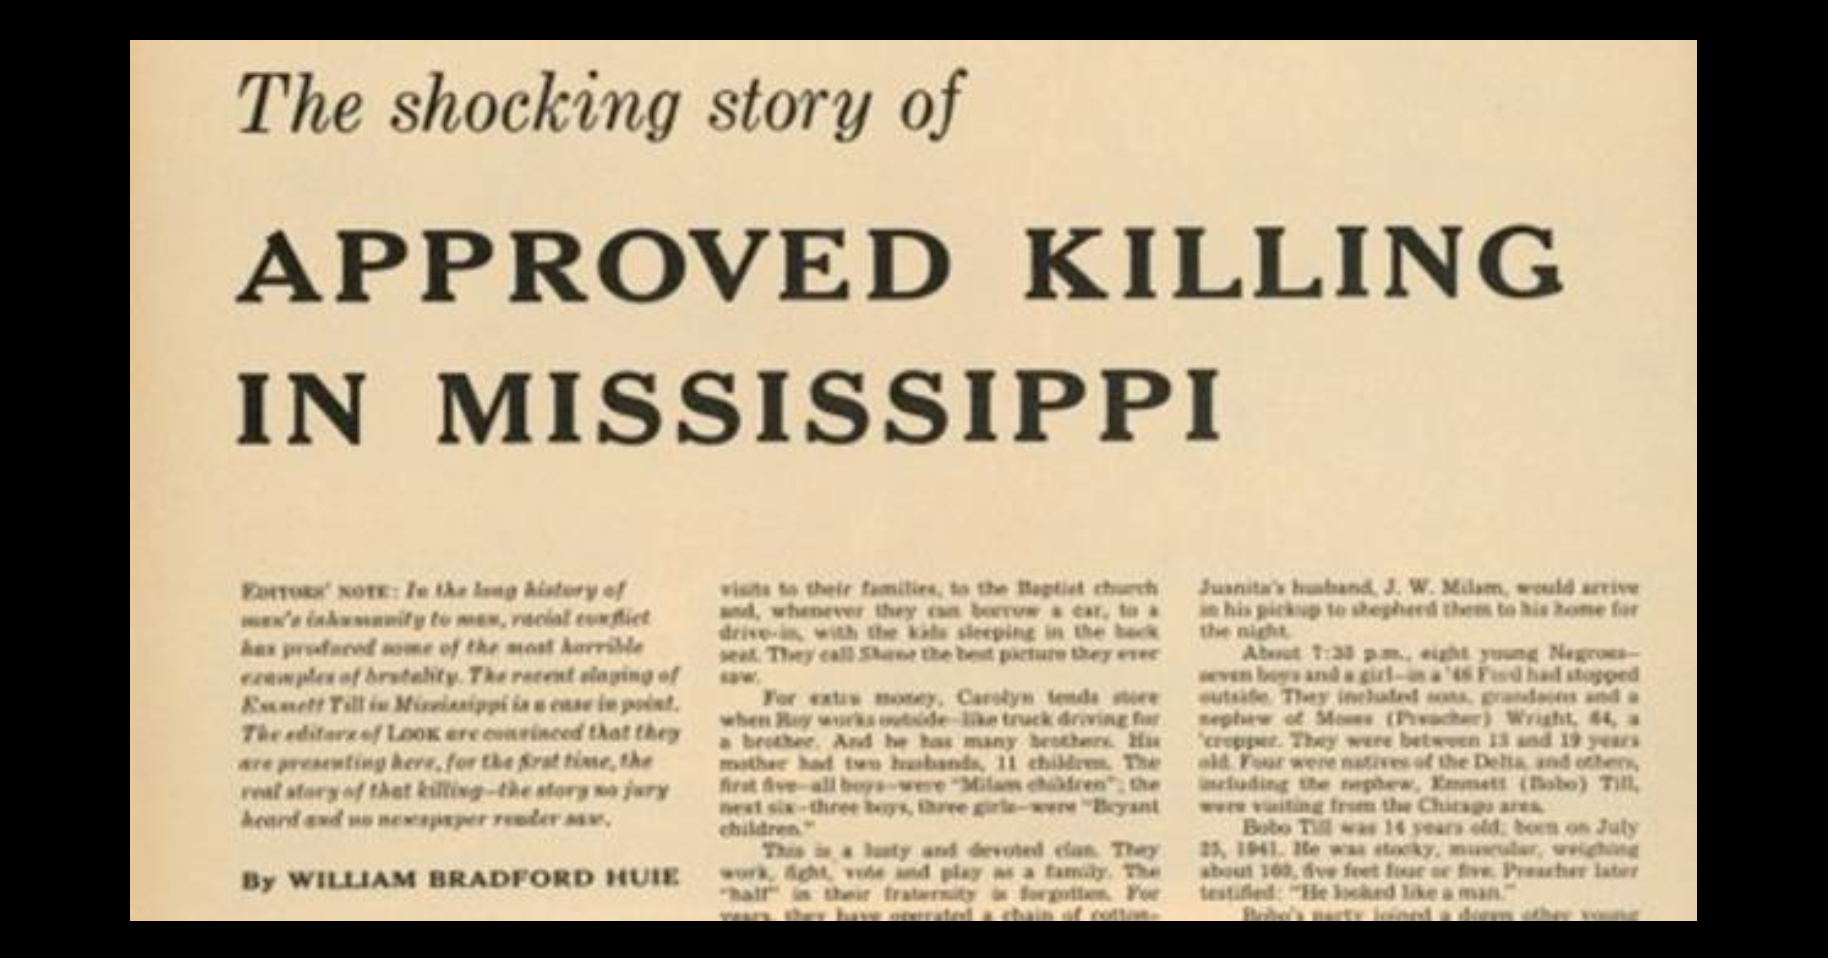 Approved killing in Mississippi newspaper headline